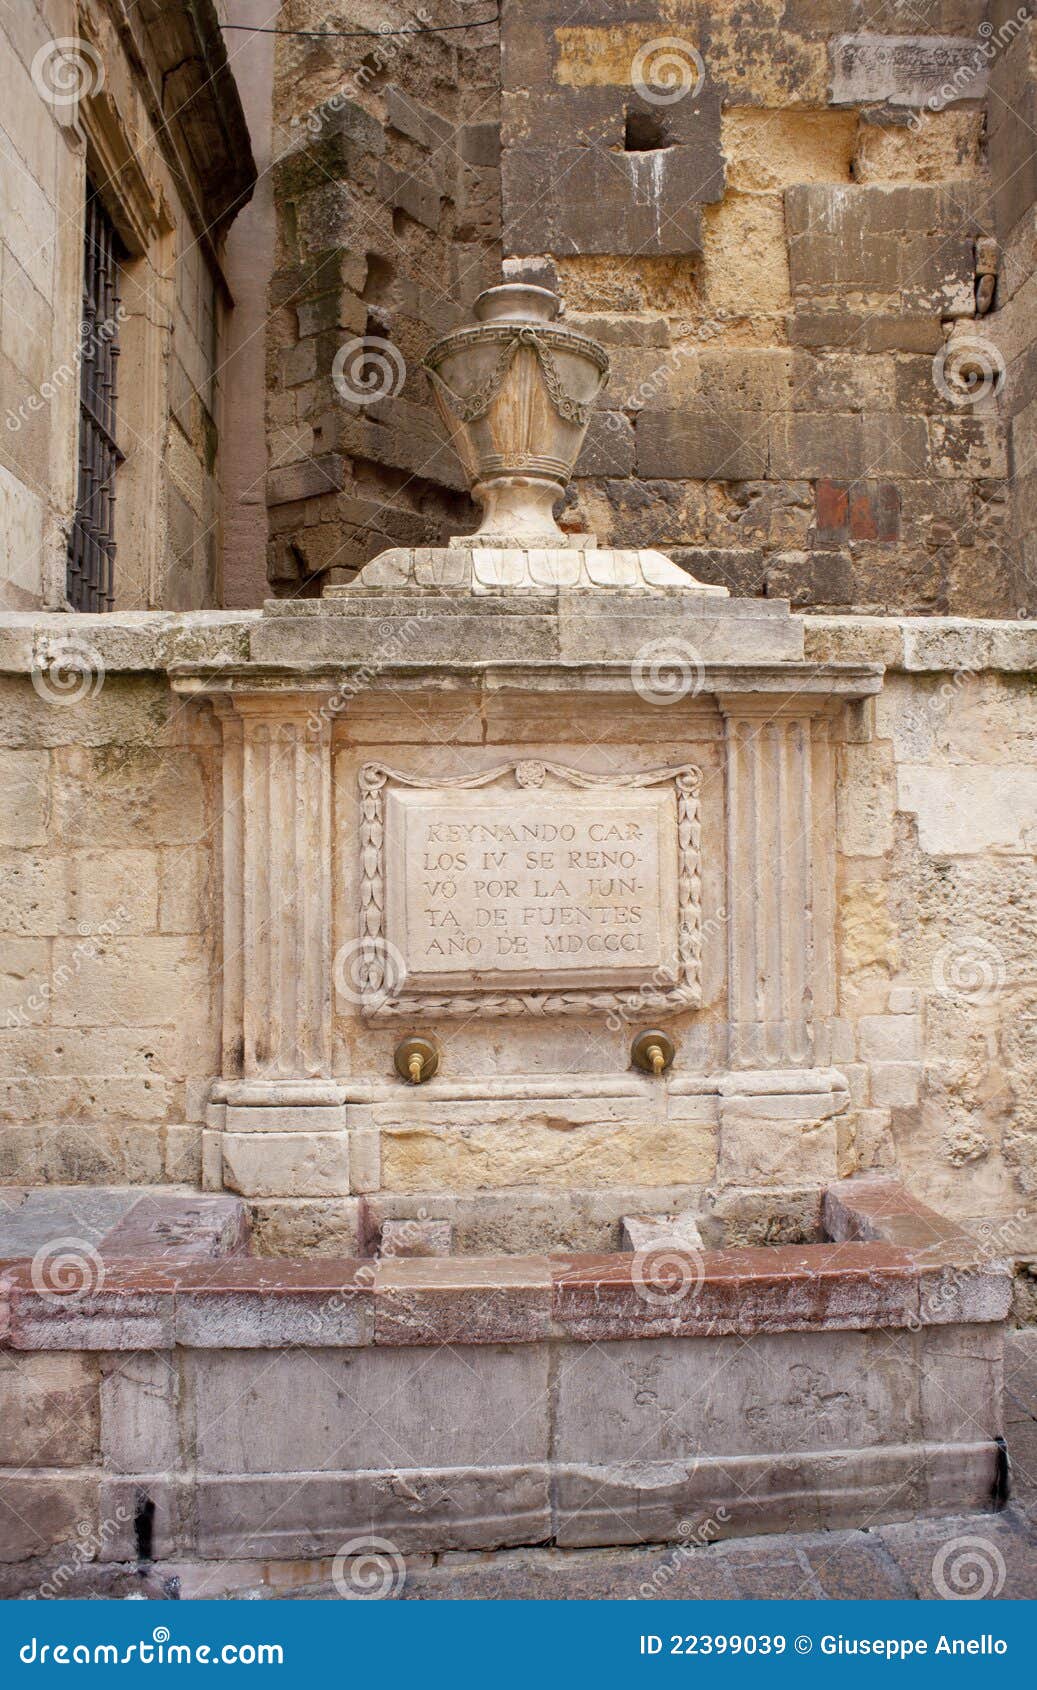 Old fountain in Leon. Old Renaissance fountain in Leon